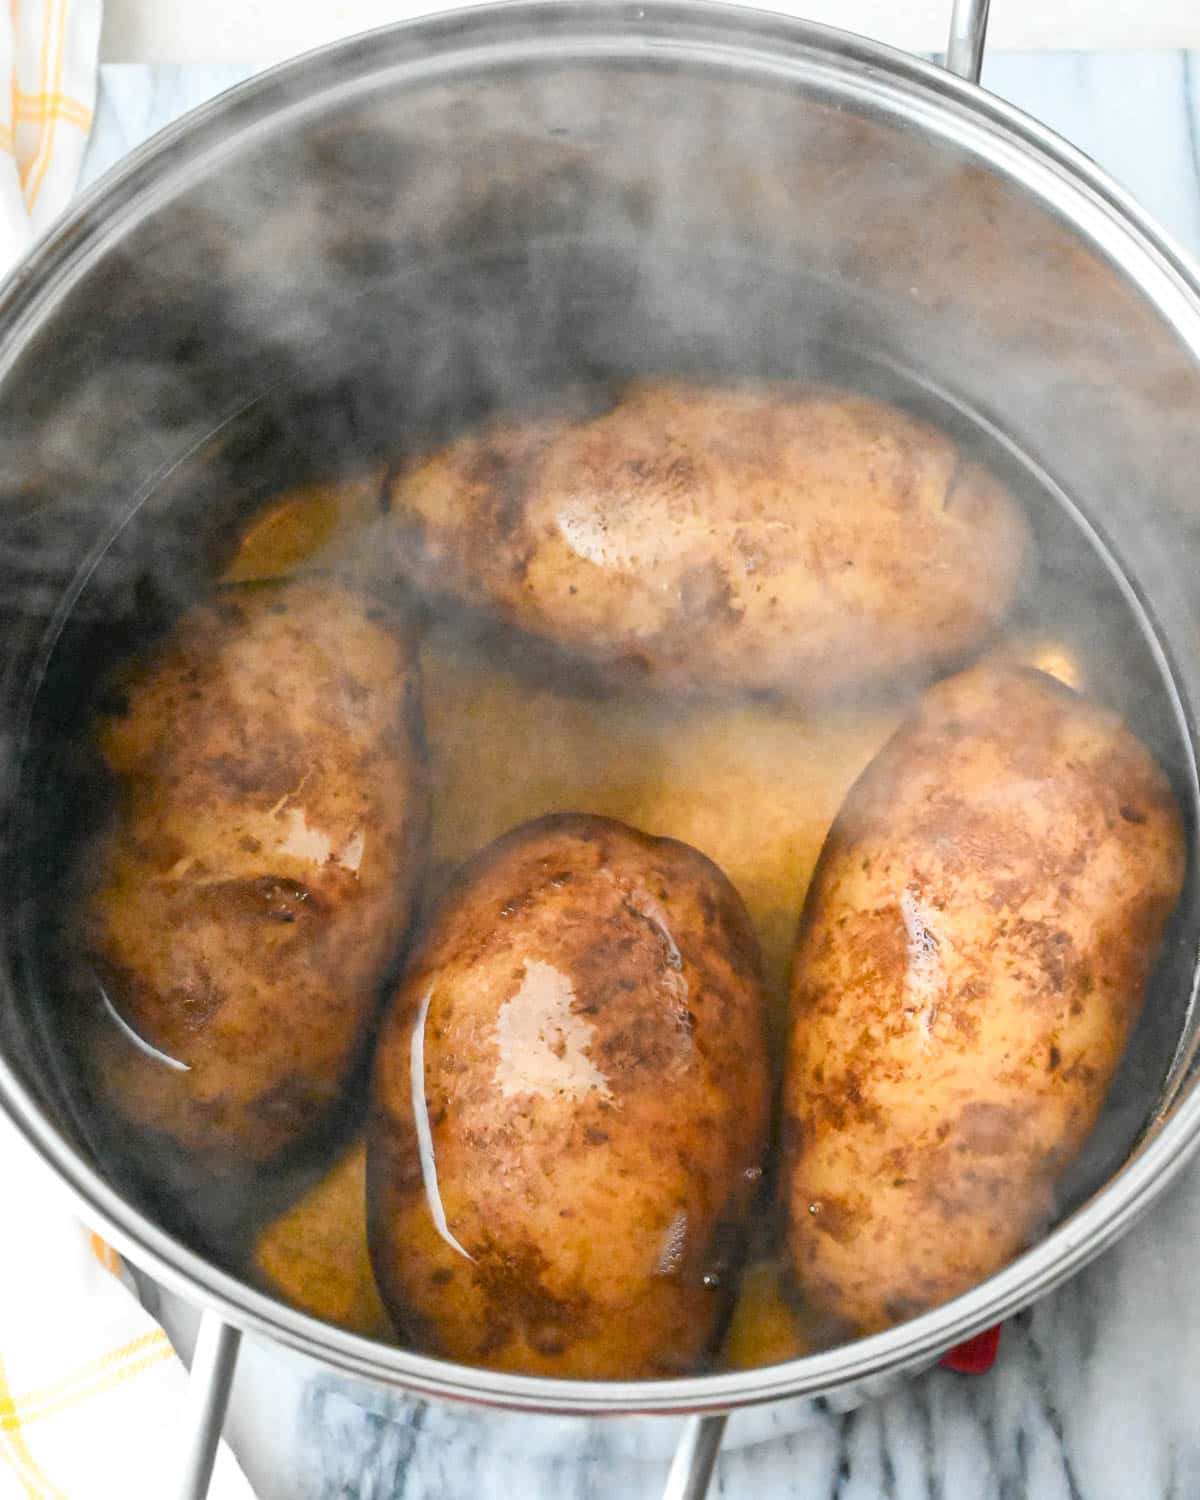 I am boiling russet potatoes until tender.